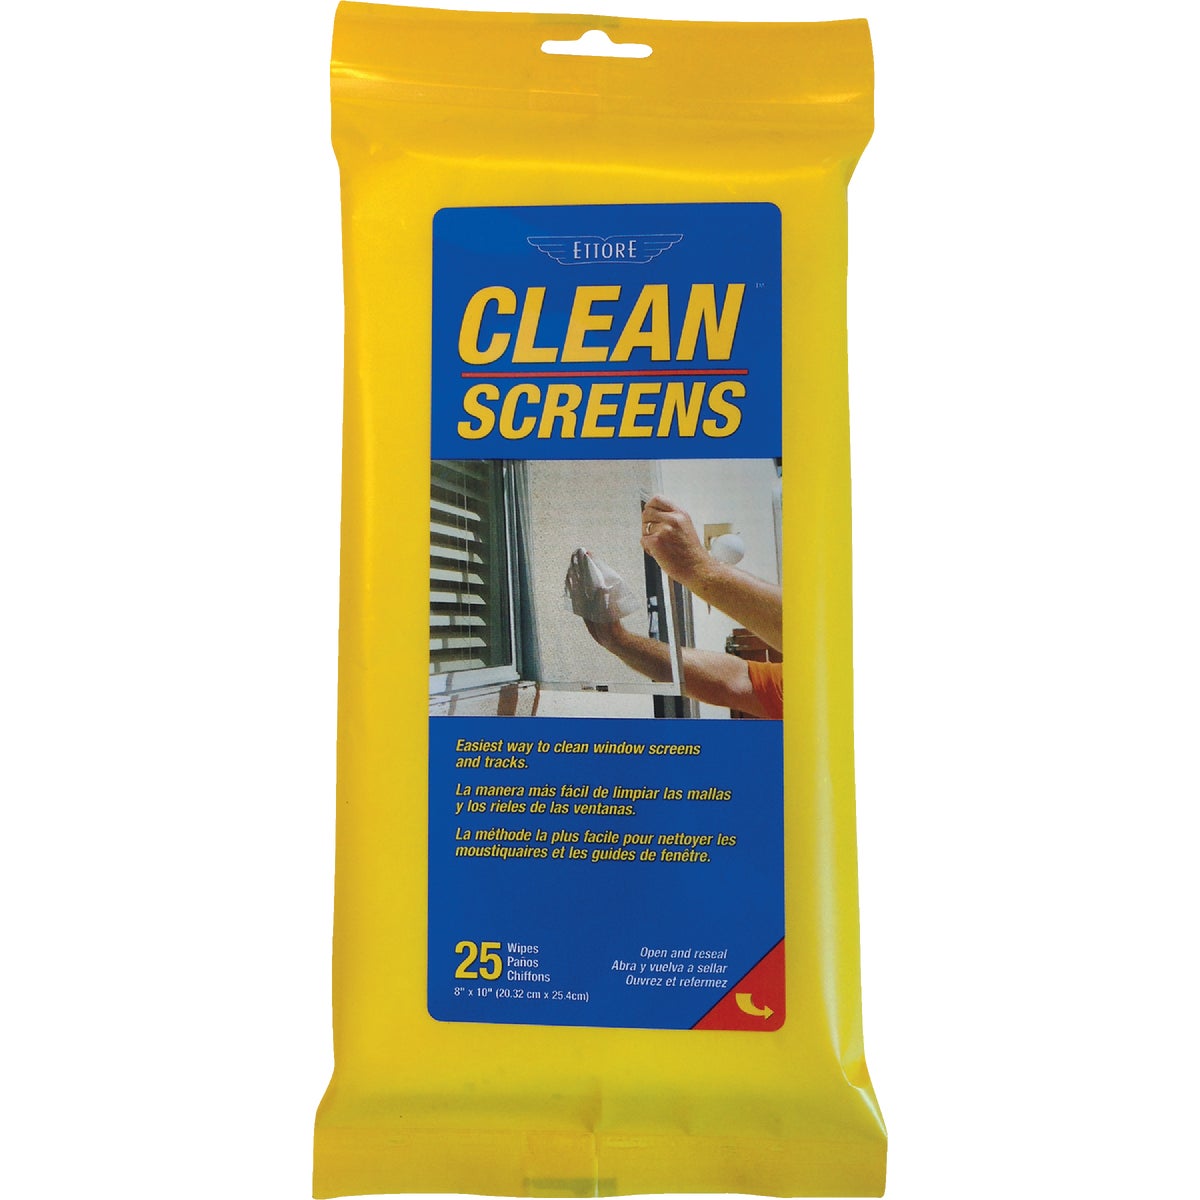 Item 605476, Easiest way to clean window screens and tracks.